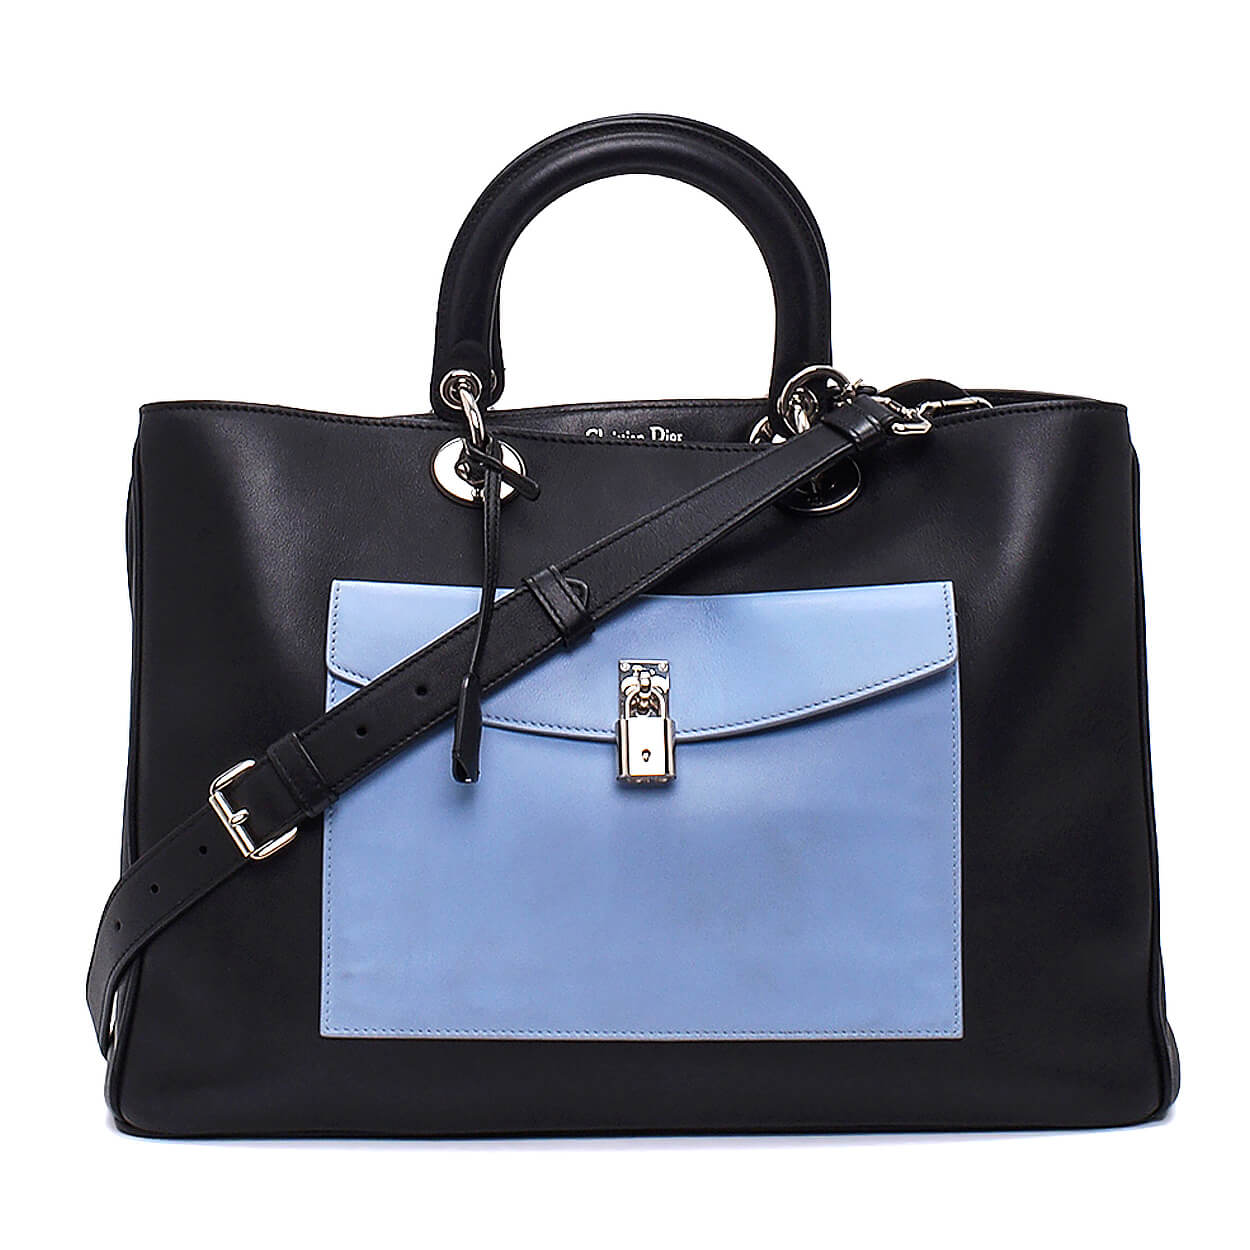 Christian Dior - Black Leather Diorissimo Medium Bag